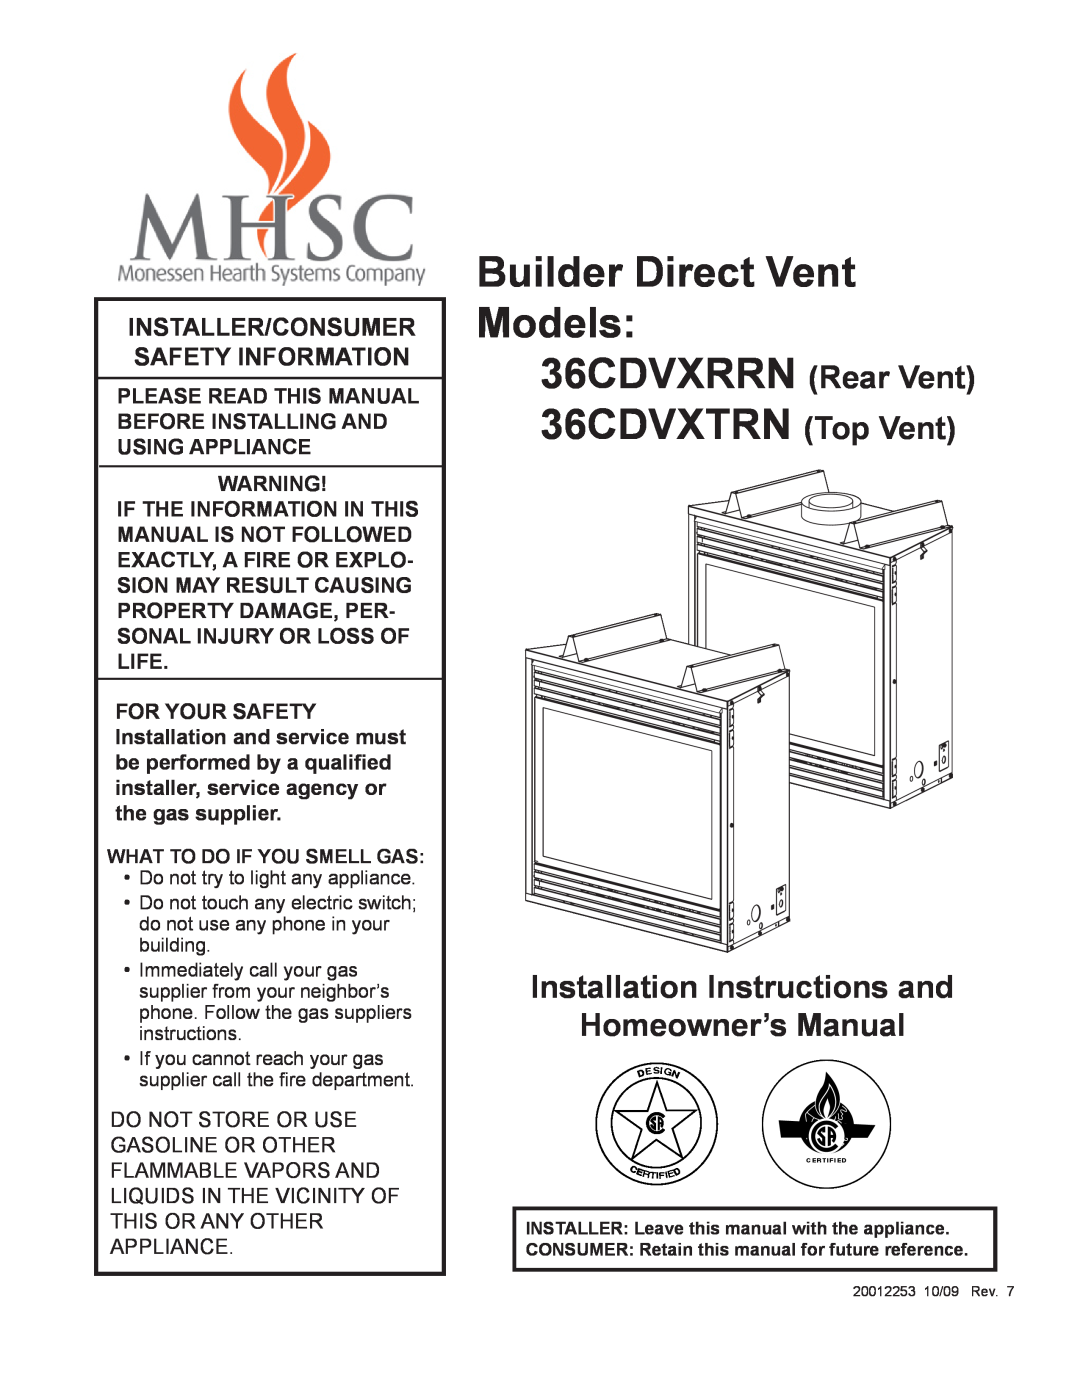 Monessen Hearth installation instructions Builder Direct Vent Models, 36CDVXTRN Top Vent, 36CDVXRRN Rear Vent 